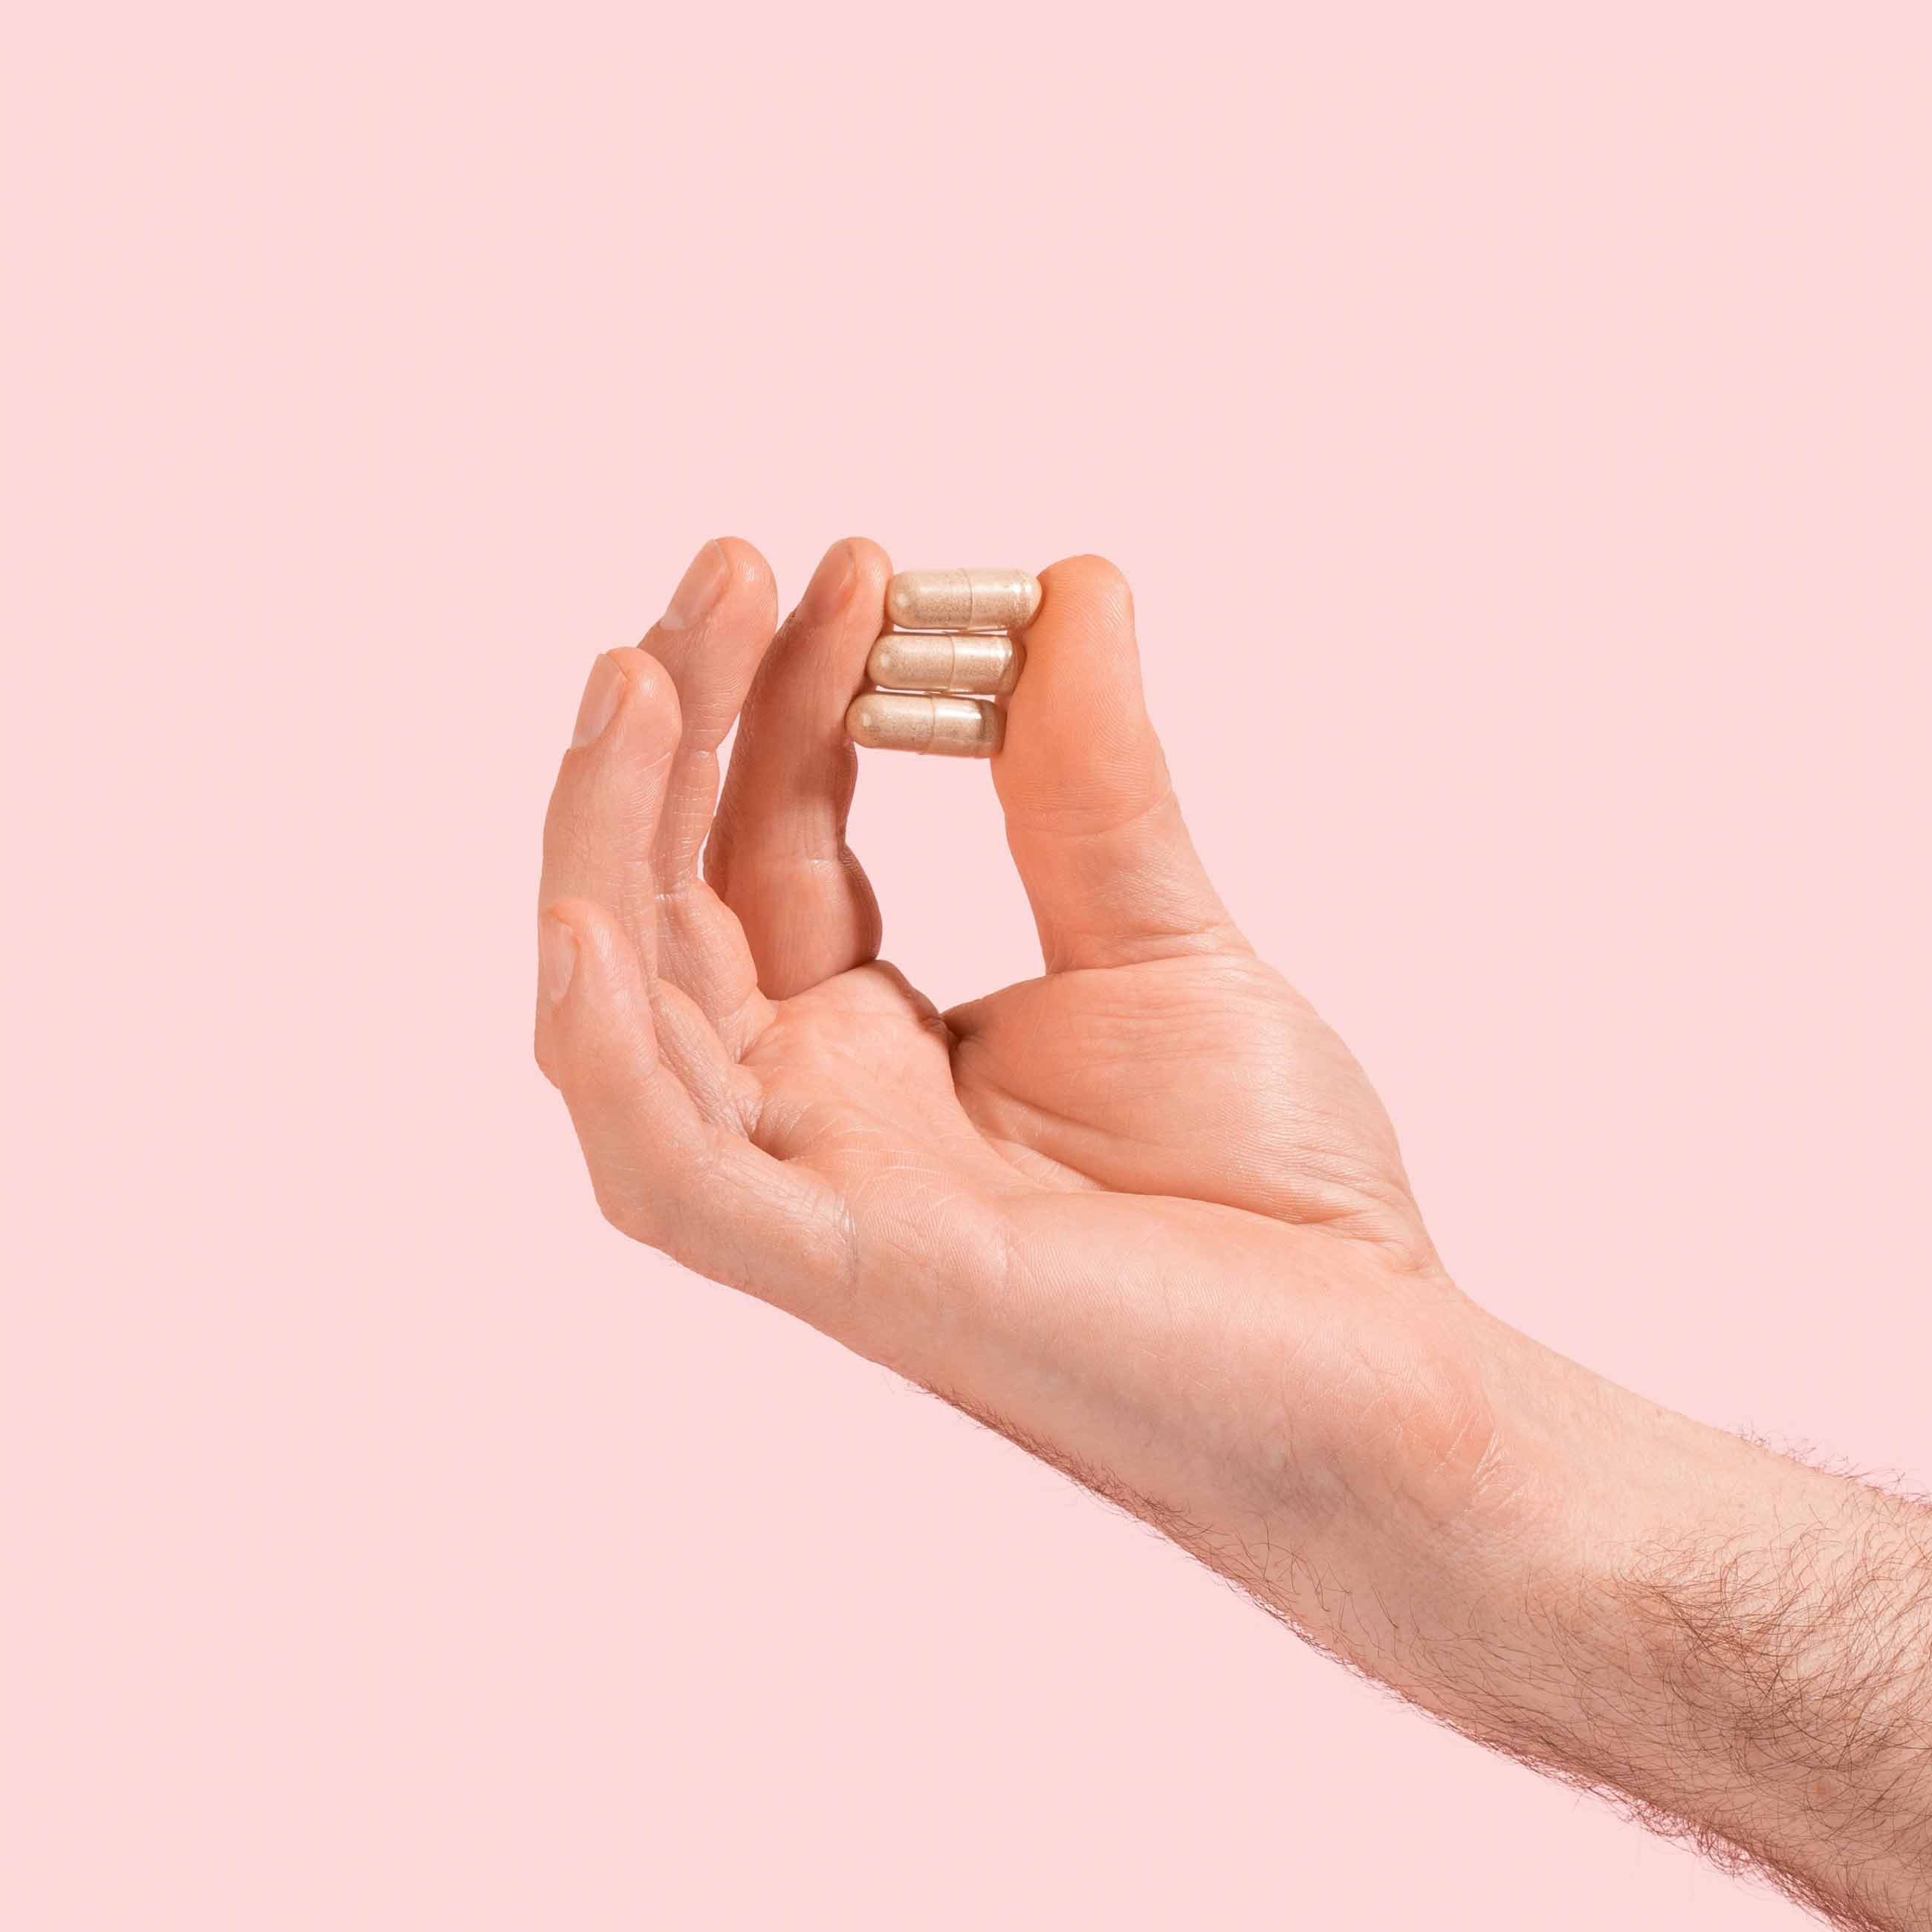 Male hand holding AV Defender capsules on a pink background